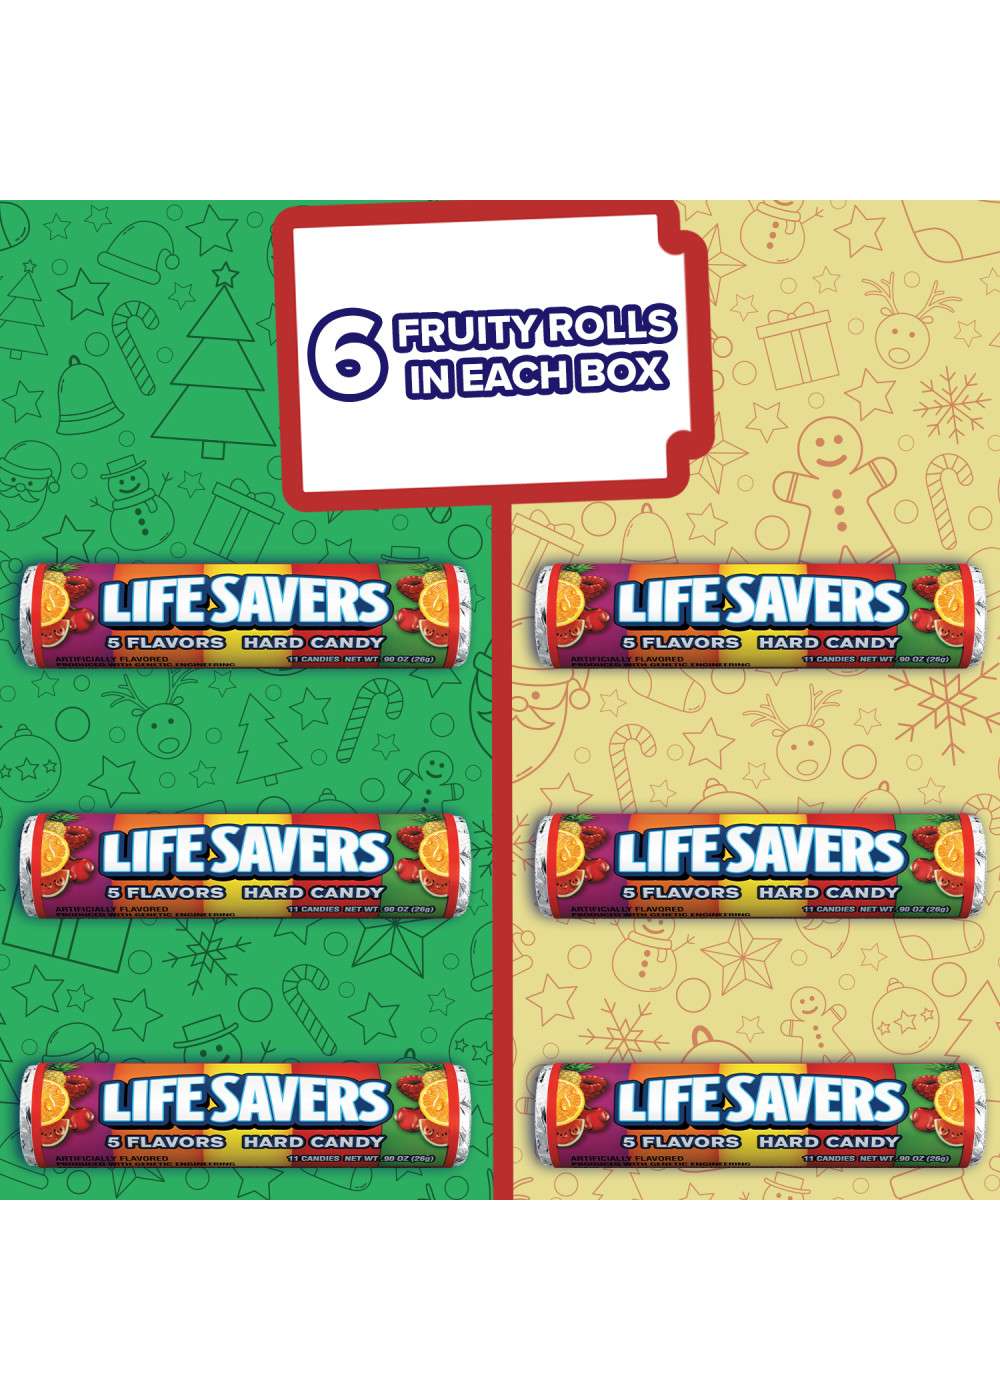 Life Savers Gummies Sweet Game Christmas Book & Crafts (7 Oz. Box Of 6  Rolls)